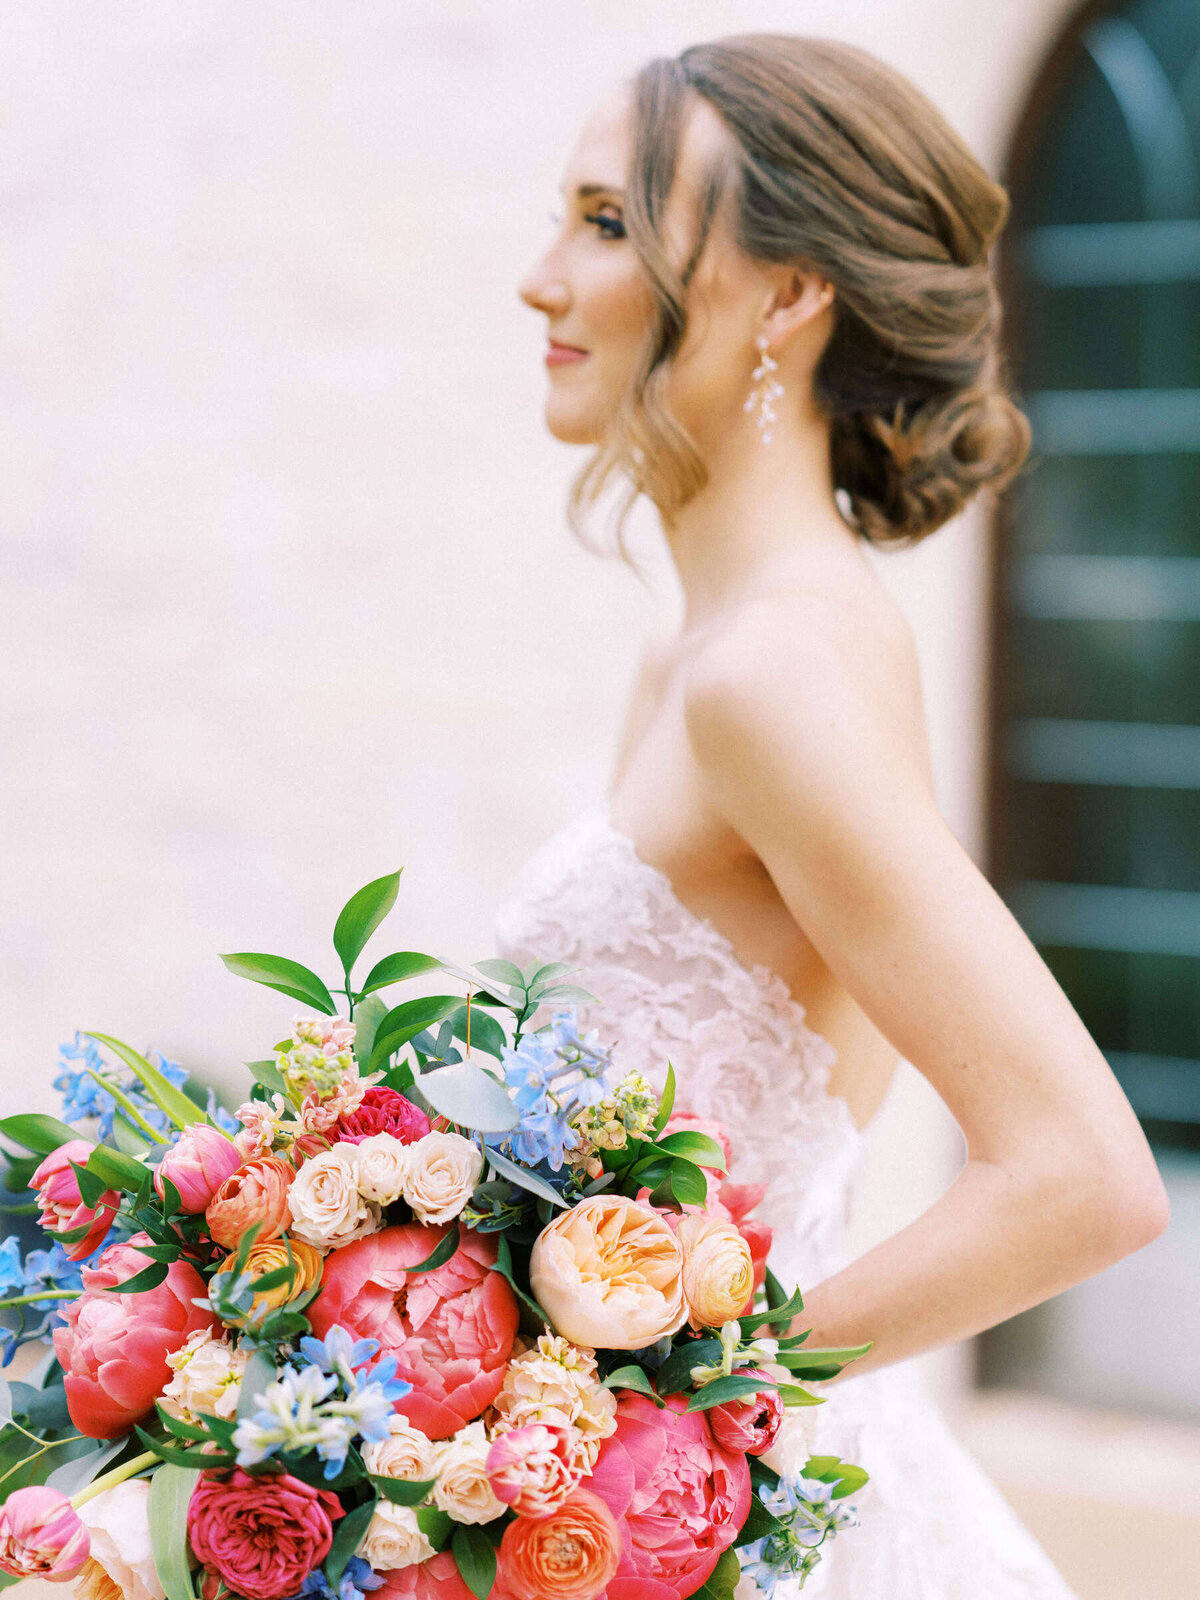 Bride in Monique Lhuillier wedding gown holds her vibrant colorful bridal bouquet